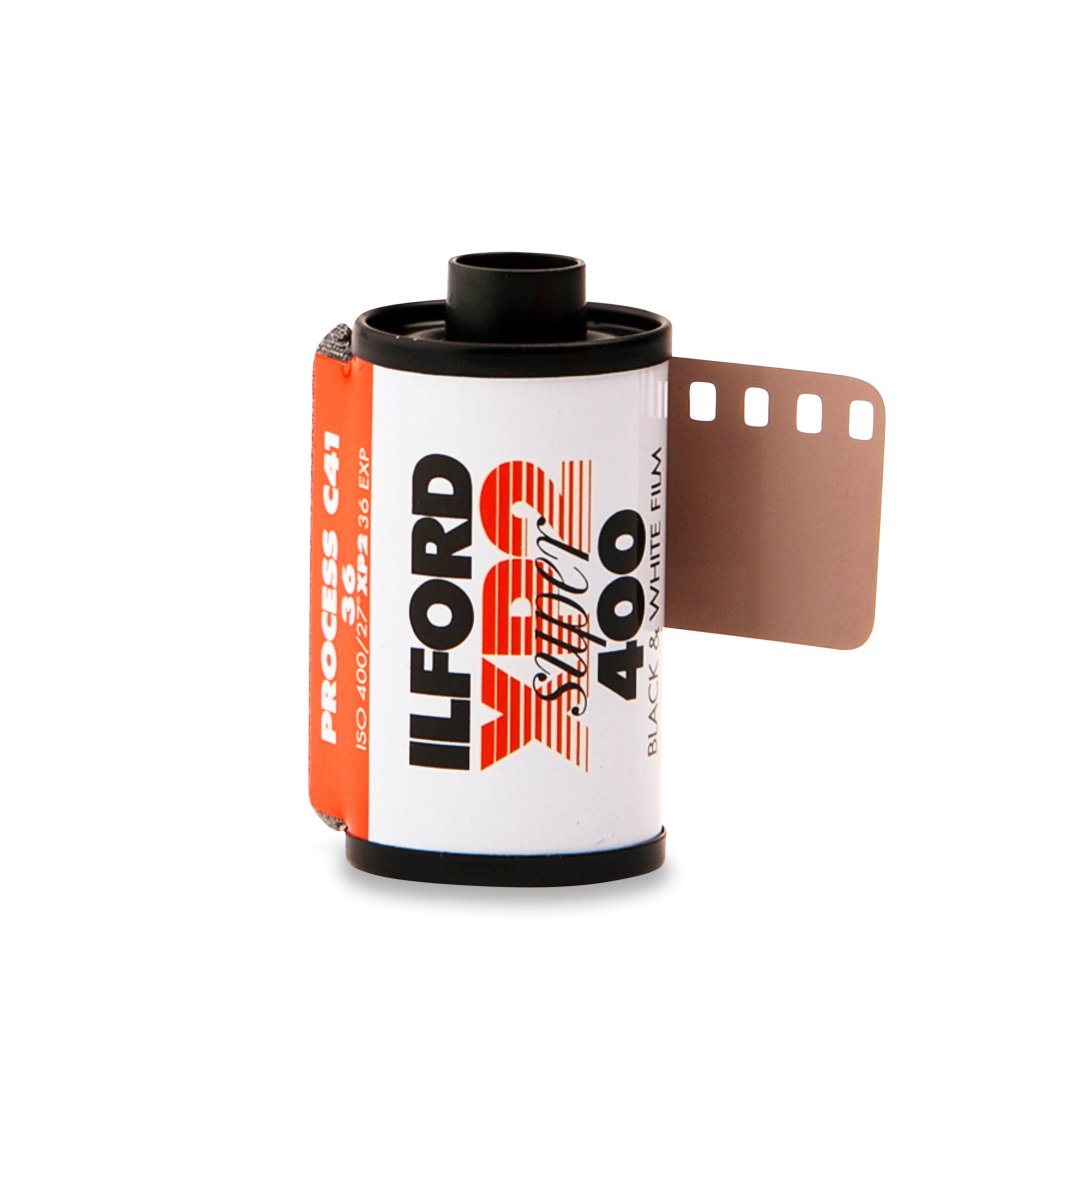 Ilford XP2 400 - 35mm - 36 Exposure -Single Roll - Rewind Photo Lab - Ilford